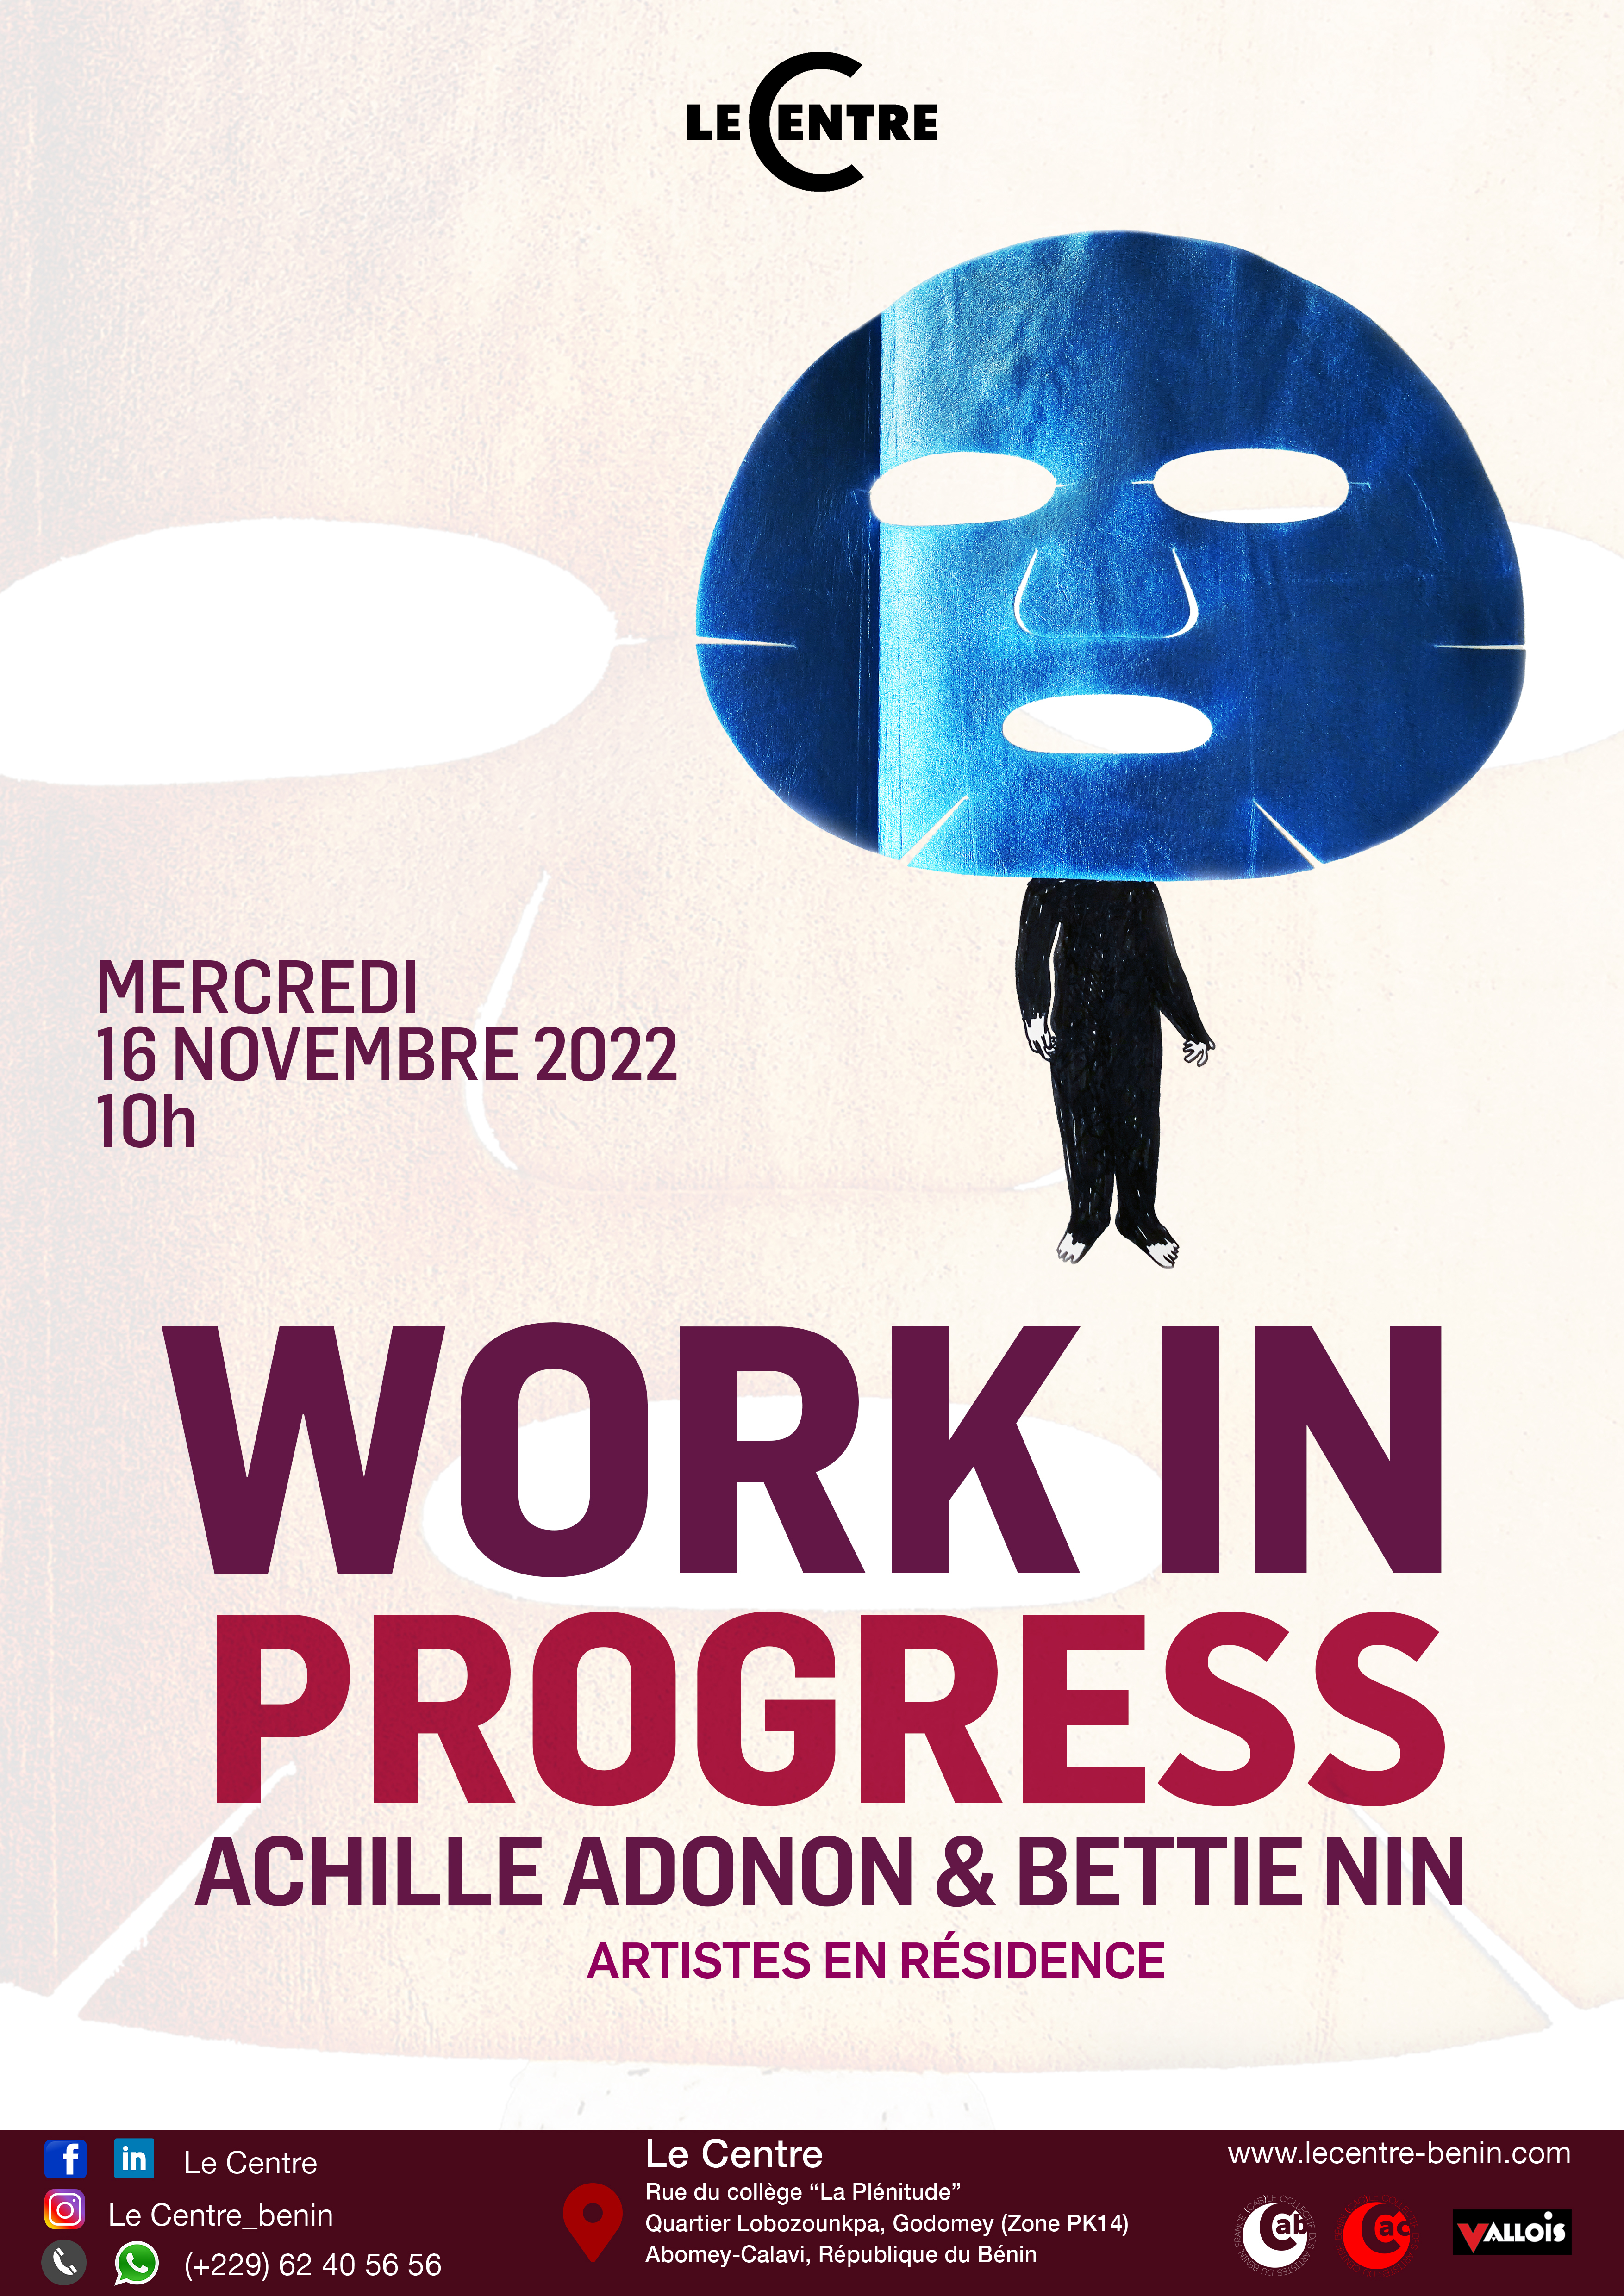 Achille Adonon & Bettie Nin